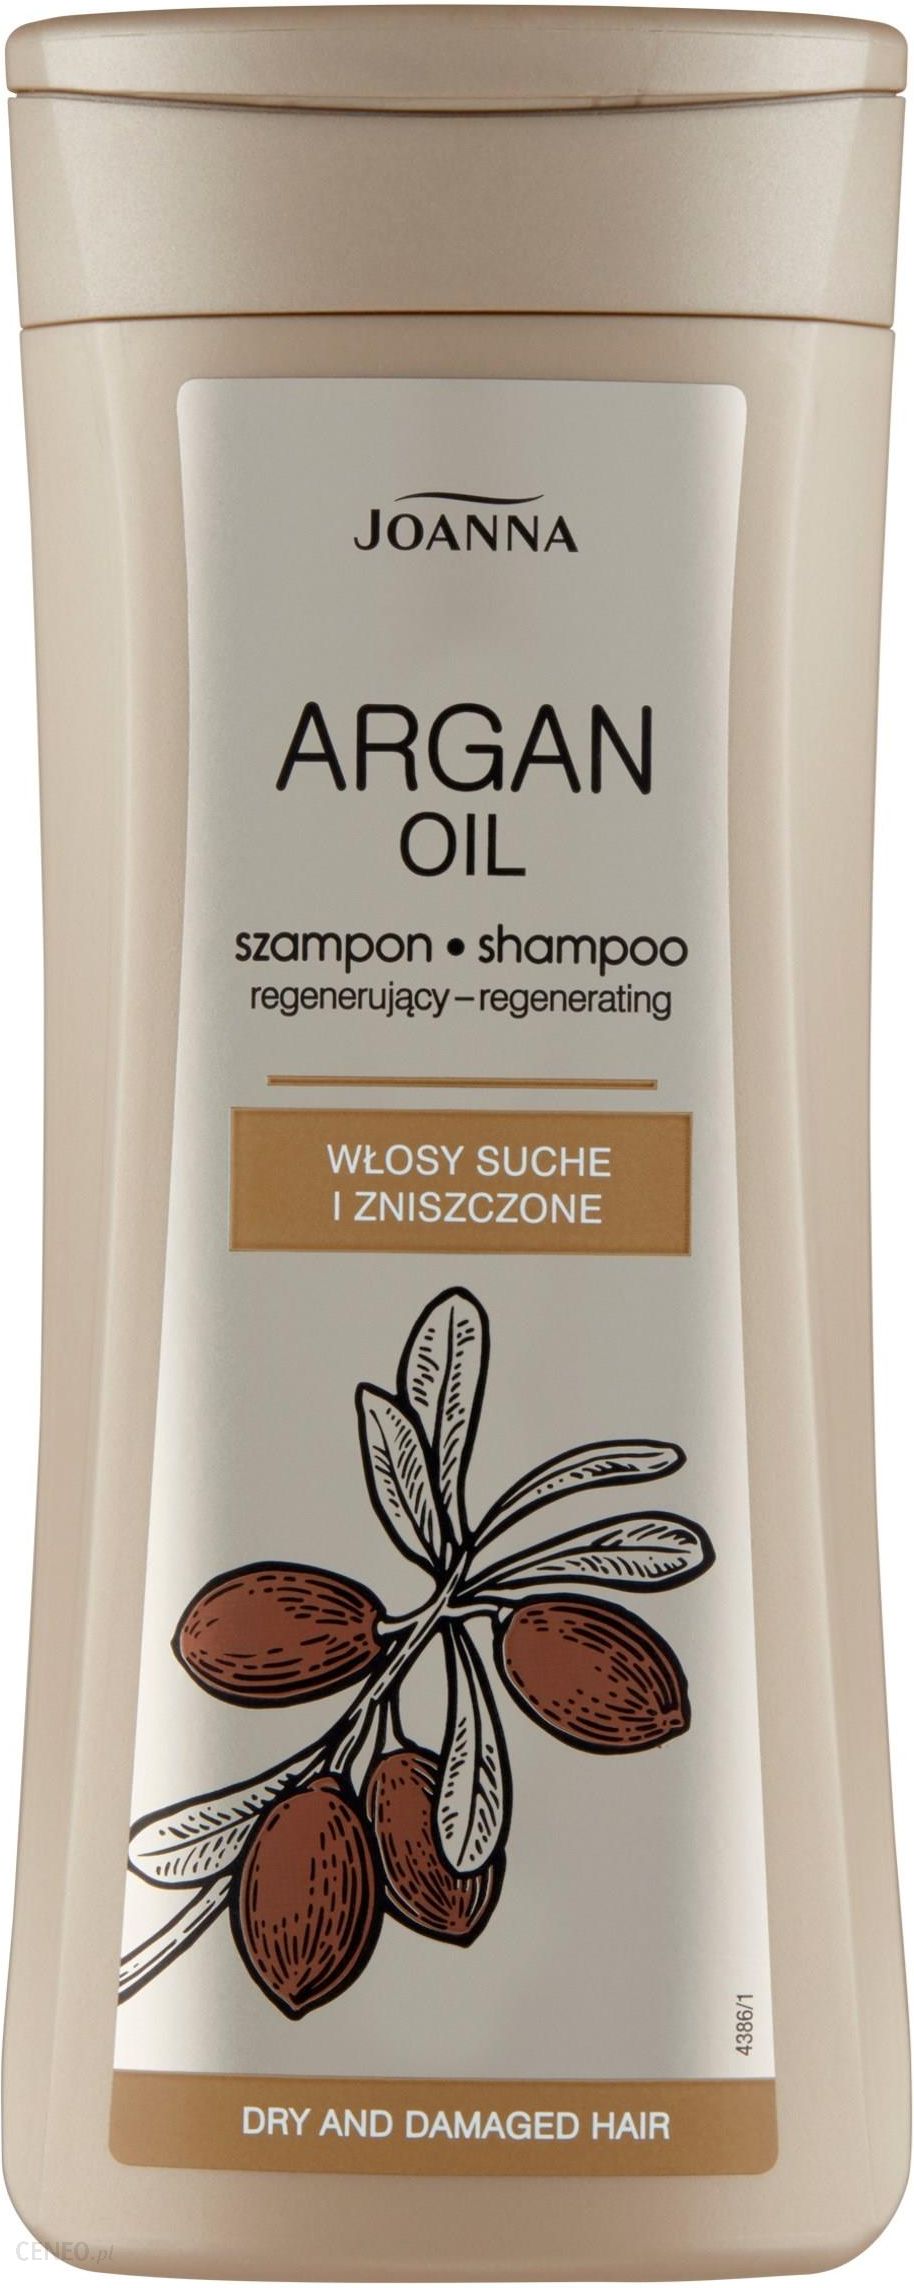 joanna argan oil szampon skład